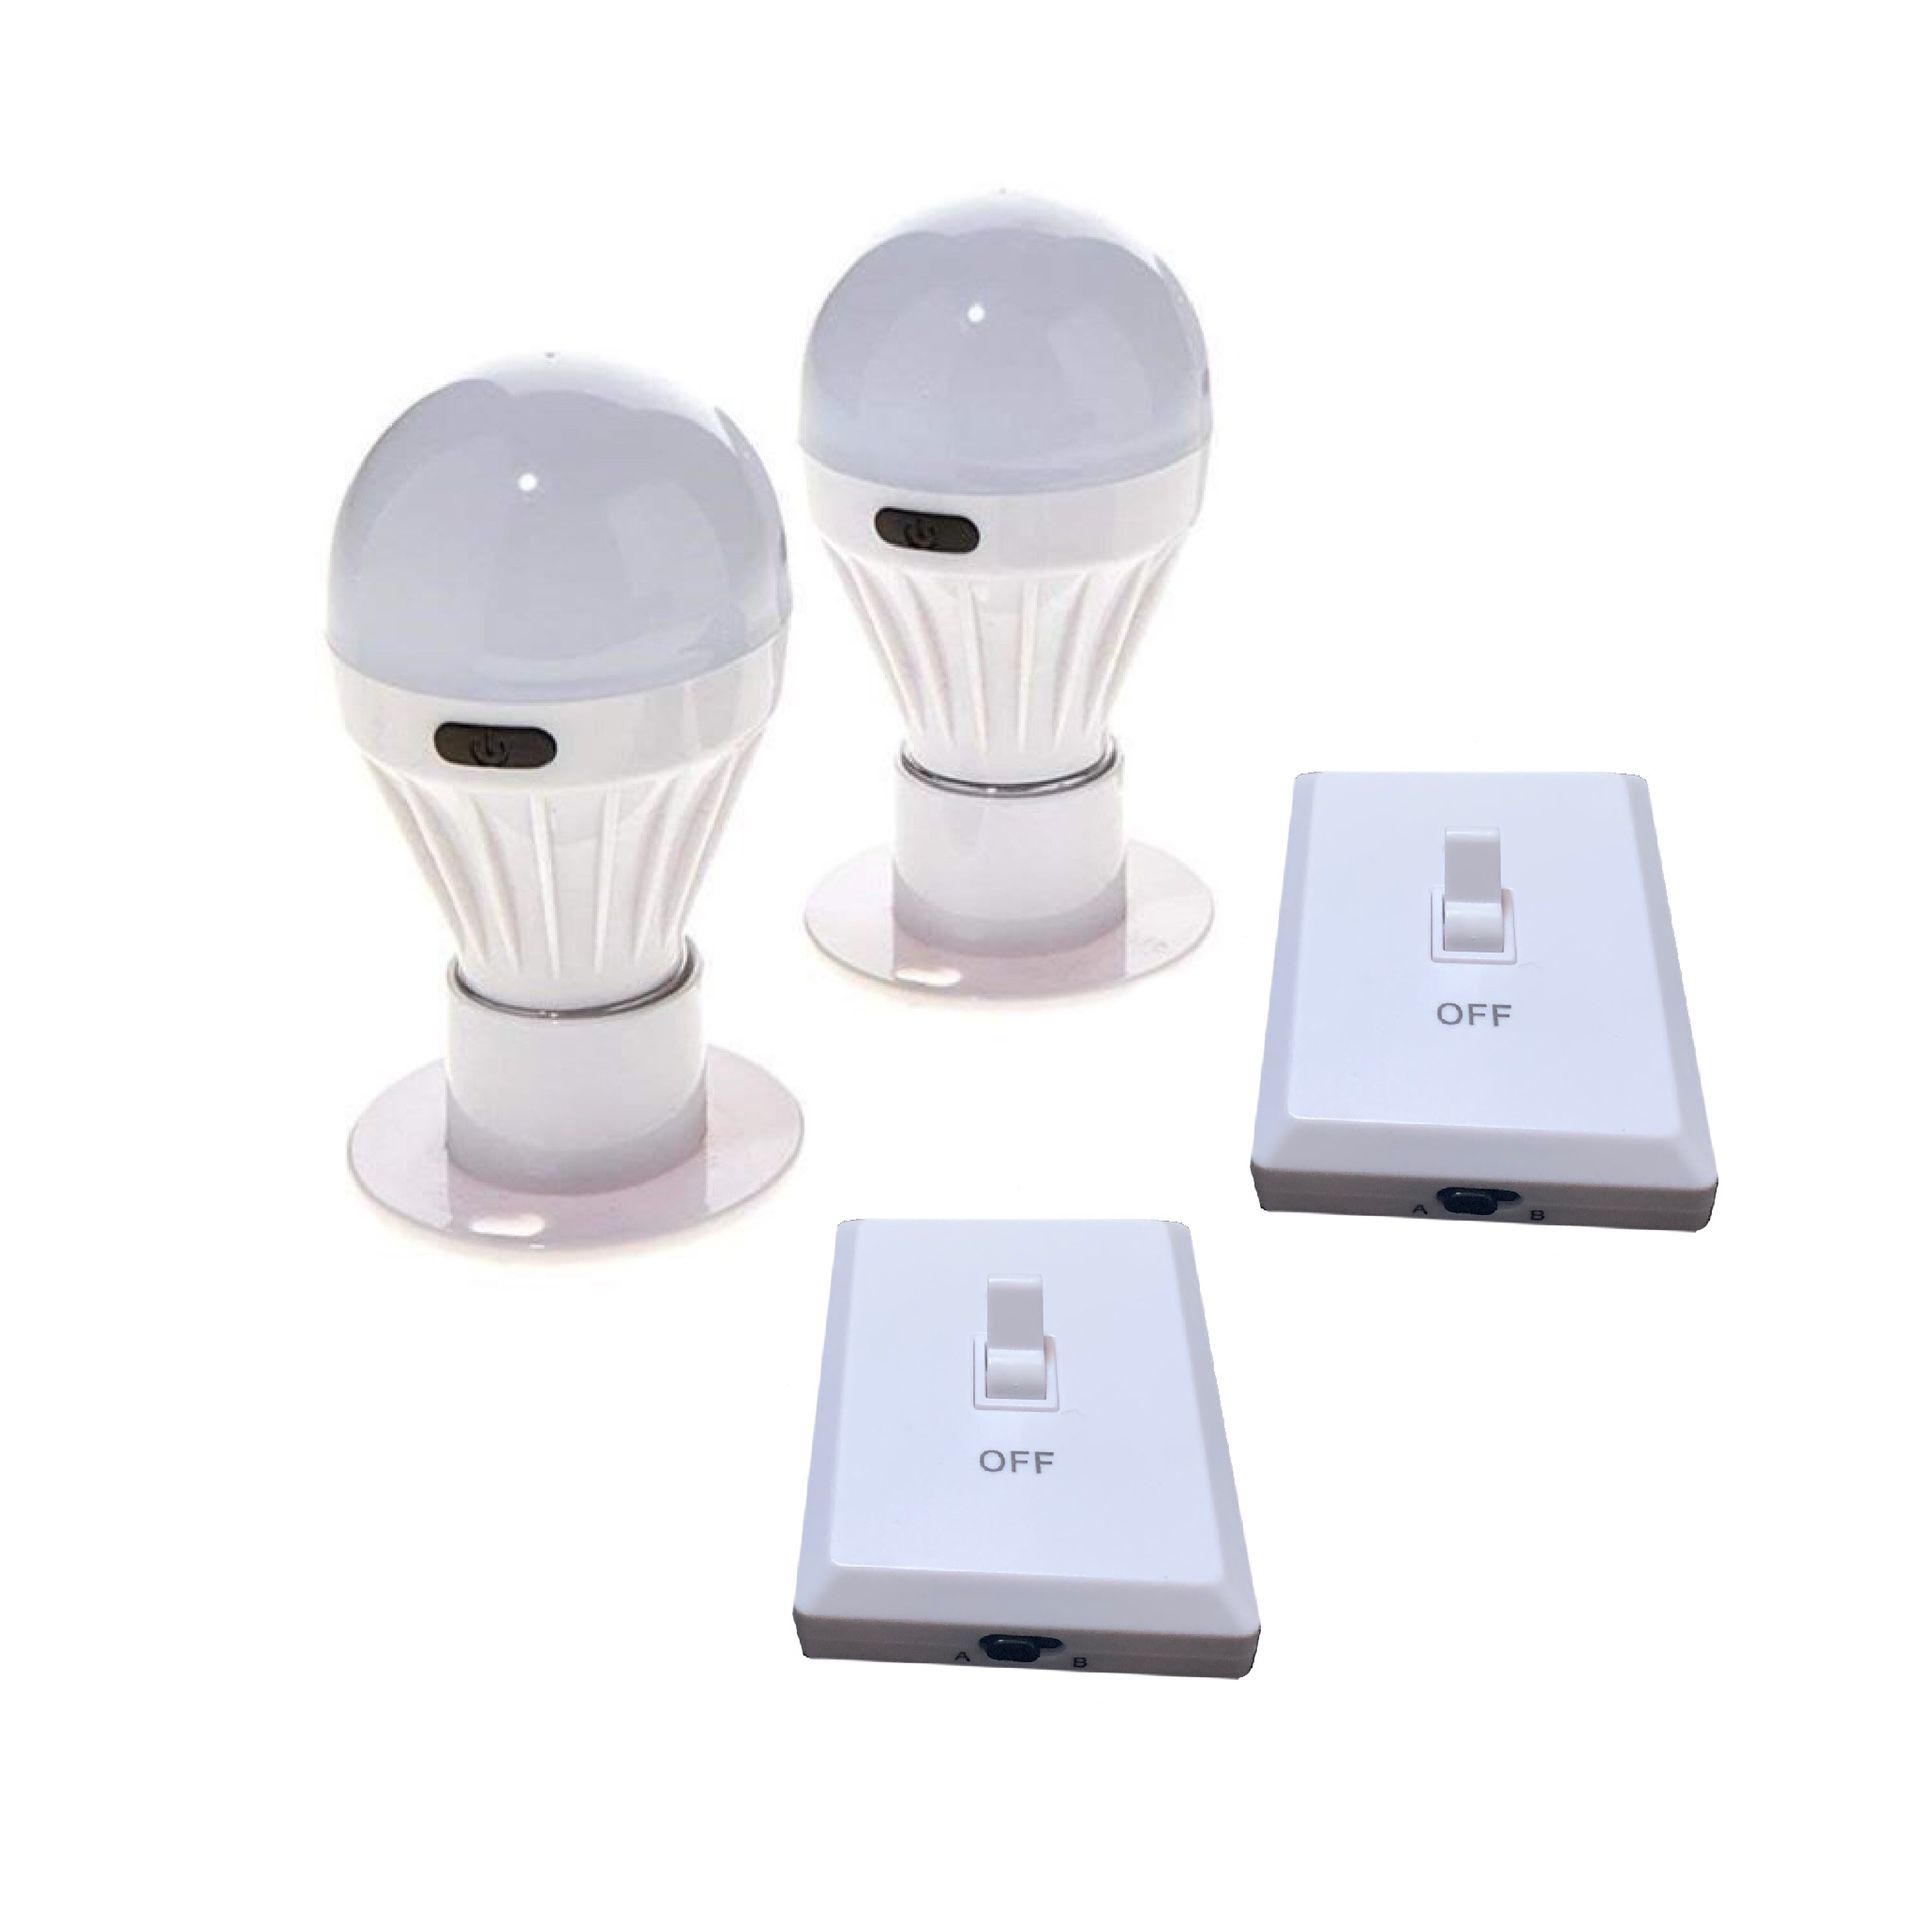 2 - Battery Operated Wireless LED Light Bulb, Night Lights, COB LED Cordless Light Switch